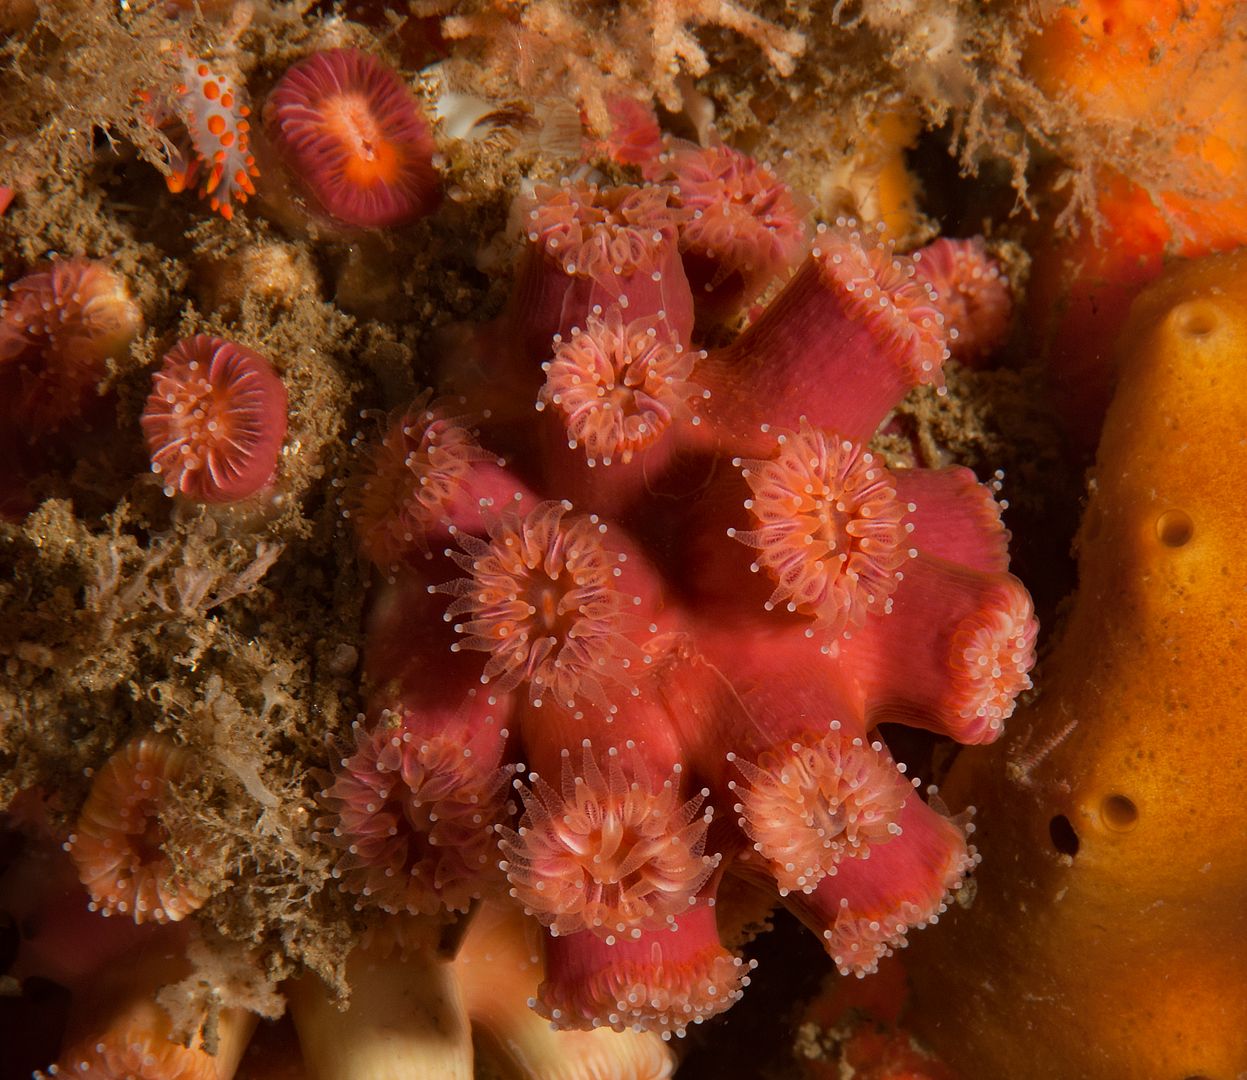 Coenocyathus bowersi photo Kevins Reef 60_zpsipubyf4i.jpg